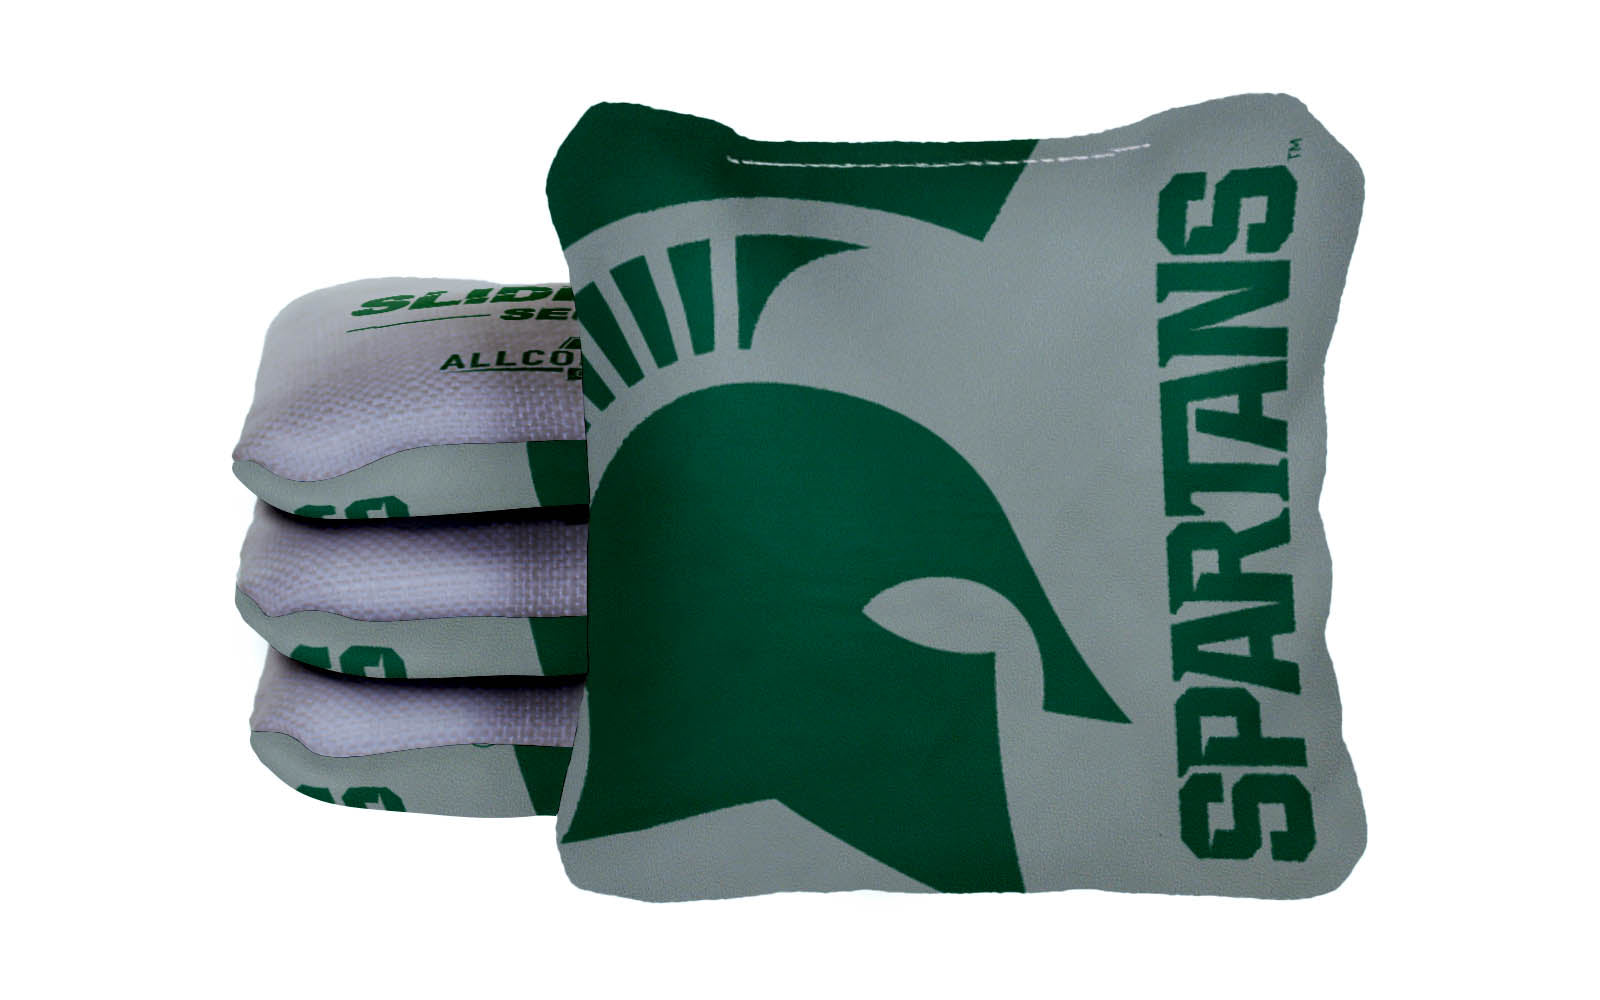 Officially Licensed Collegiate Cornhole Bags - AllCornhole Slide Rite - Set of 4 - Michigan State University